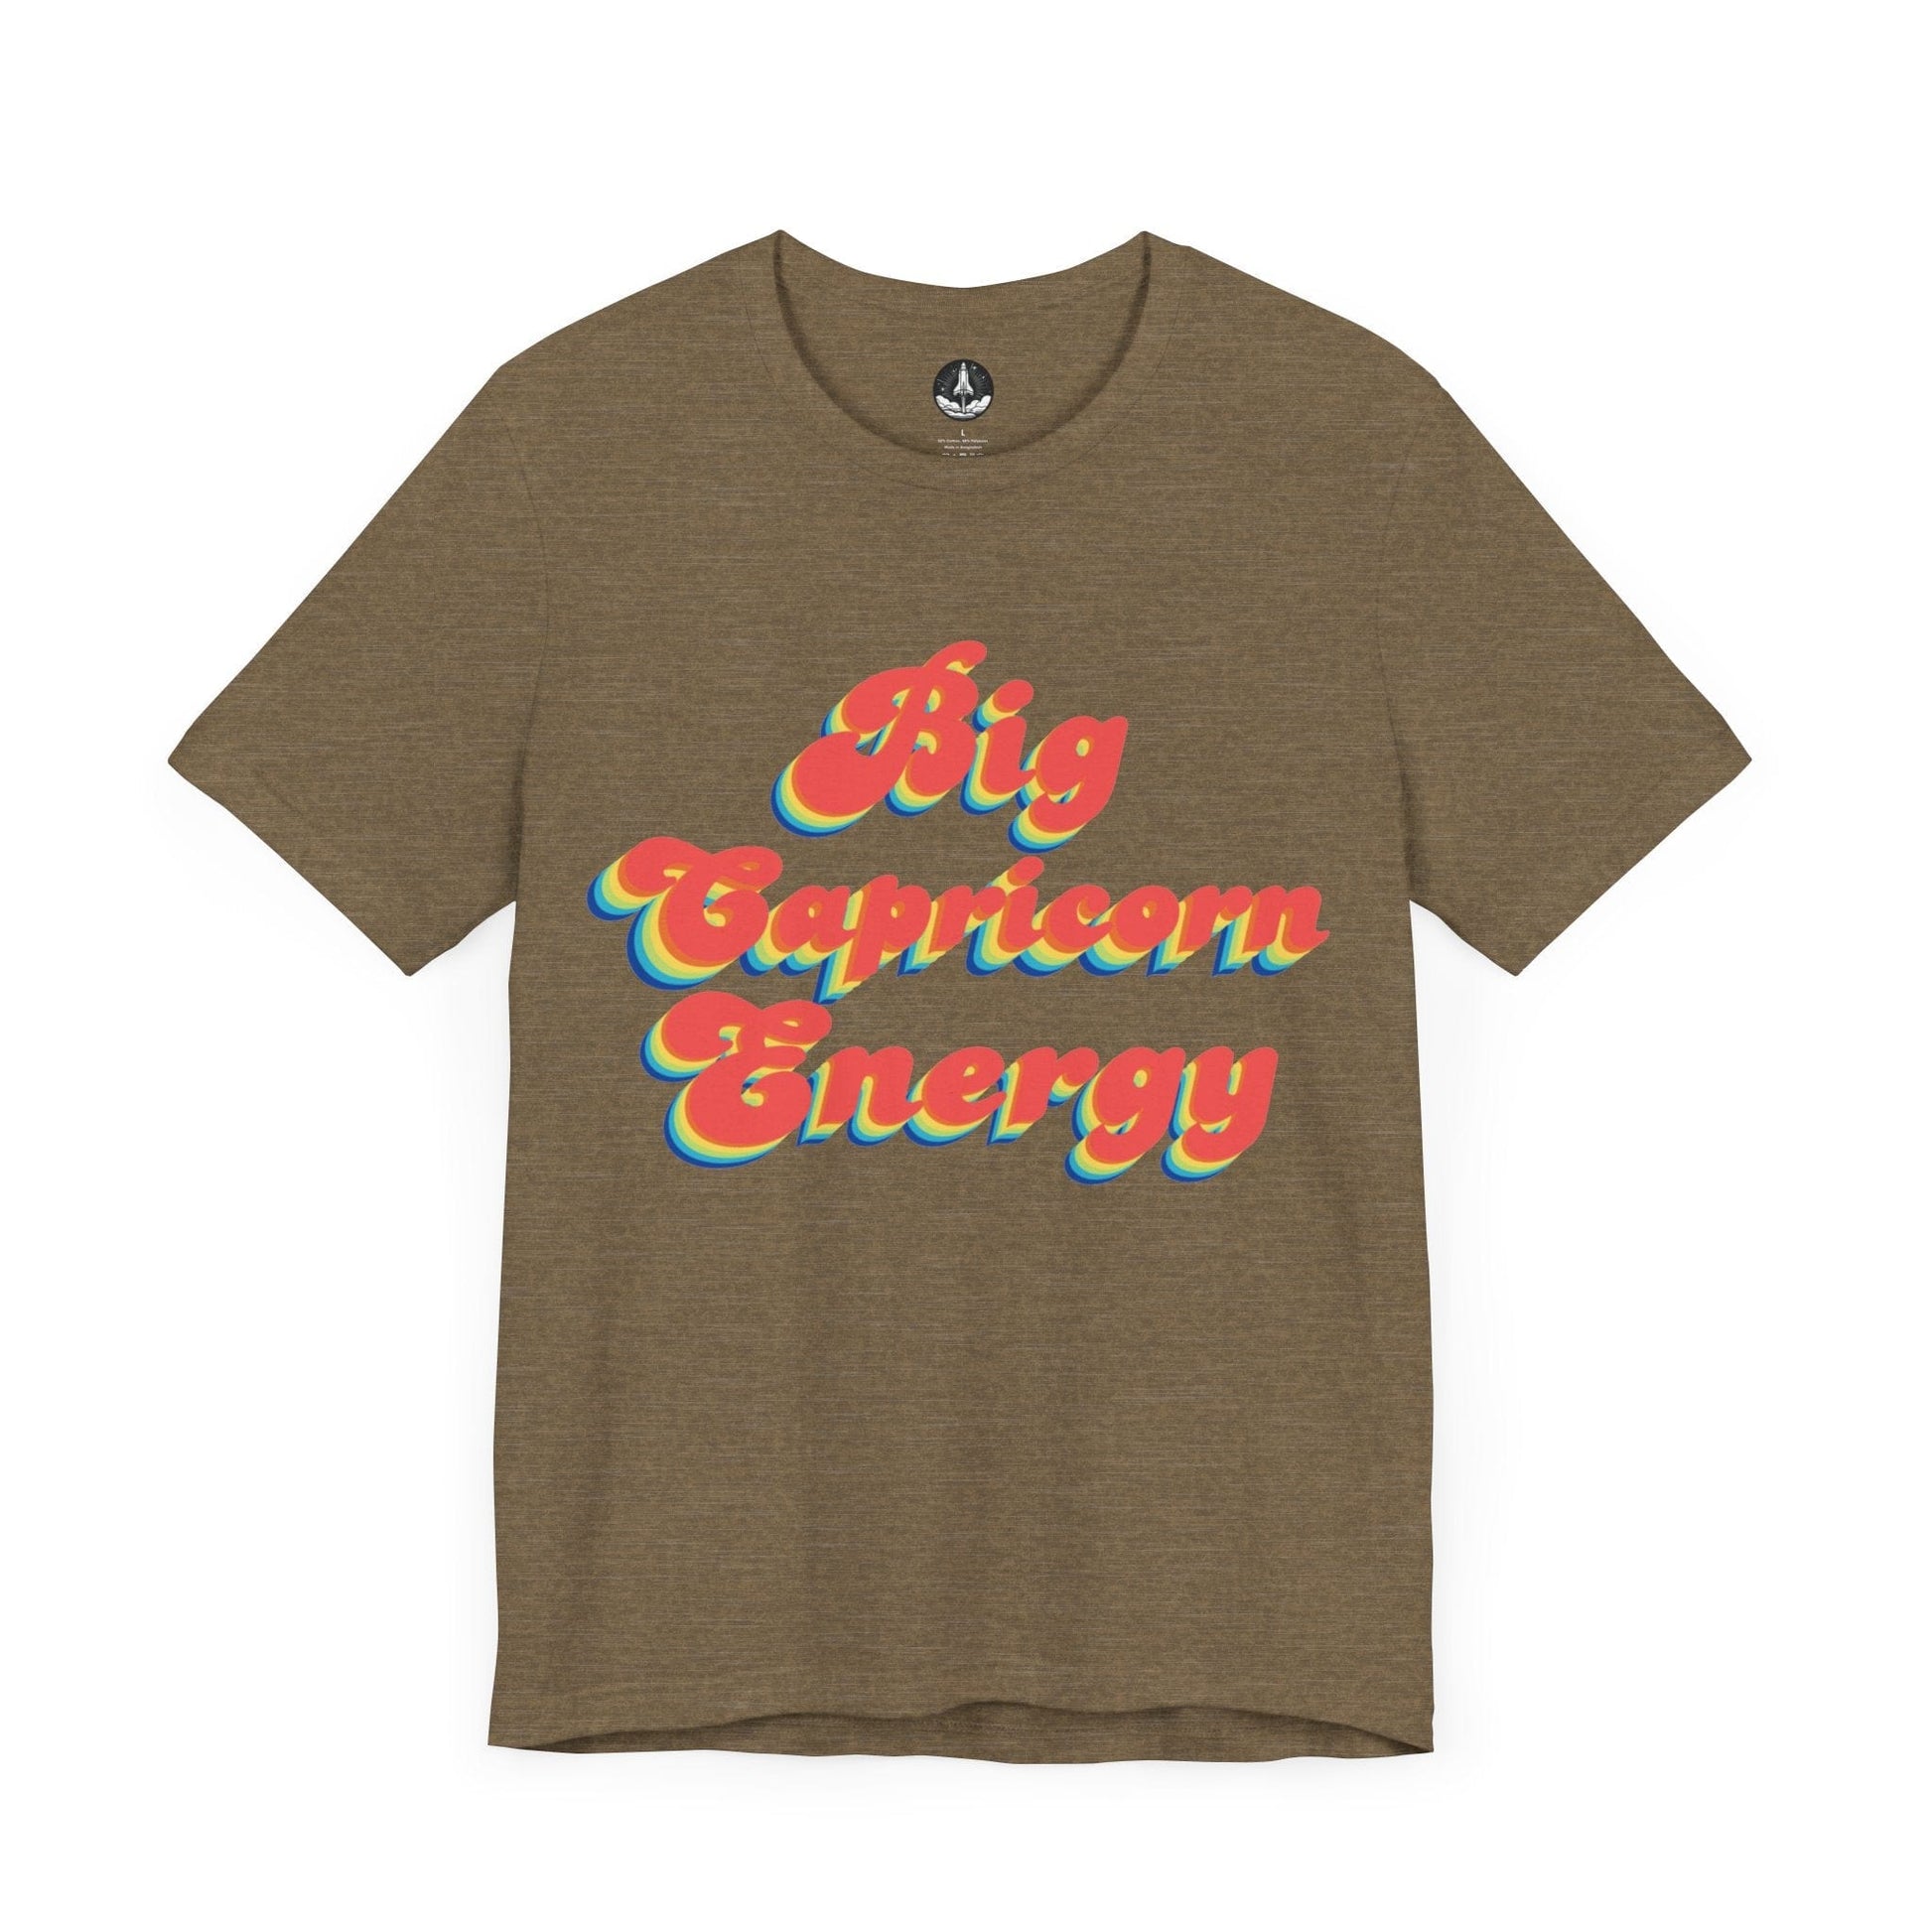 T-Shirt Heather Olive / S Big Capricorn Energy T-Shirt